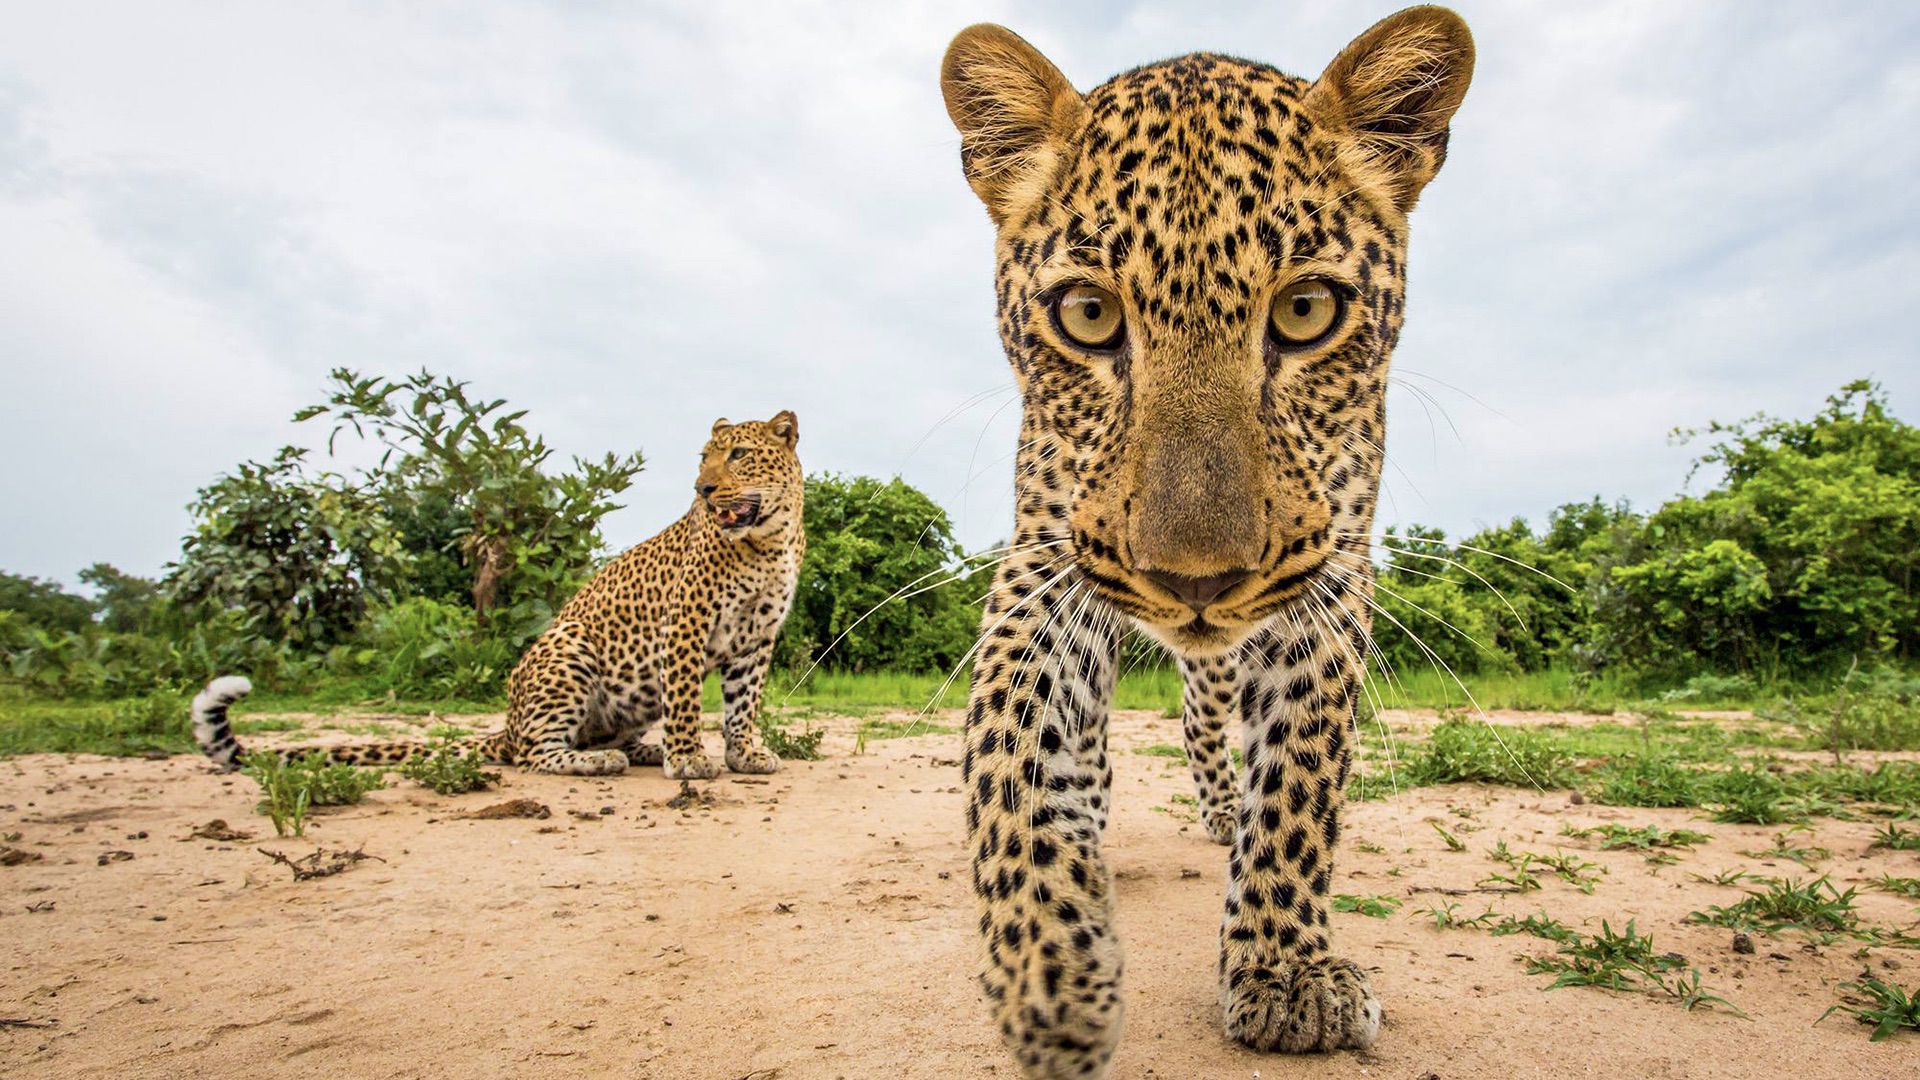 wildlife photo that show how beautiful the animal kingdom is